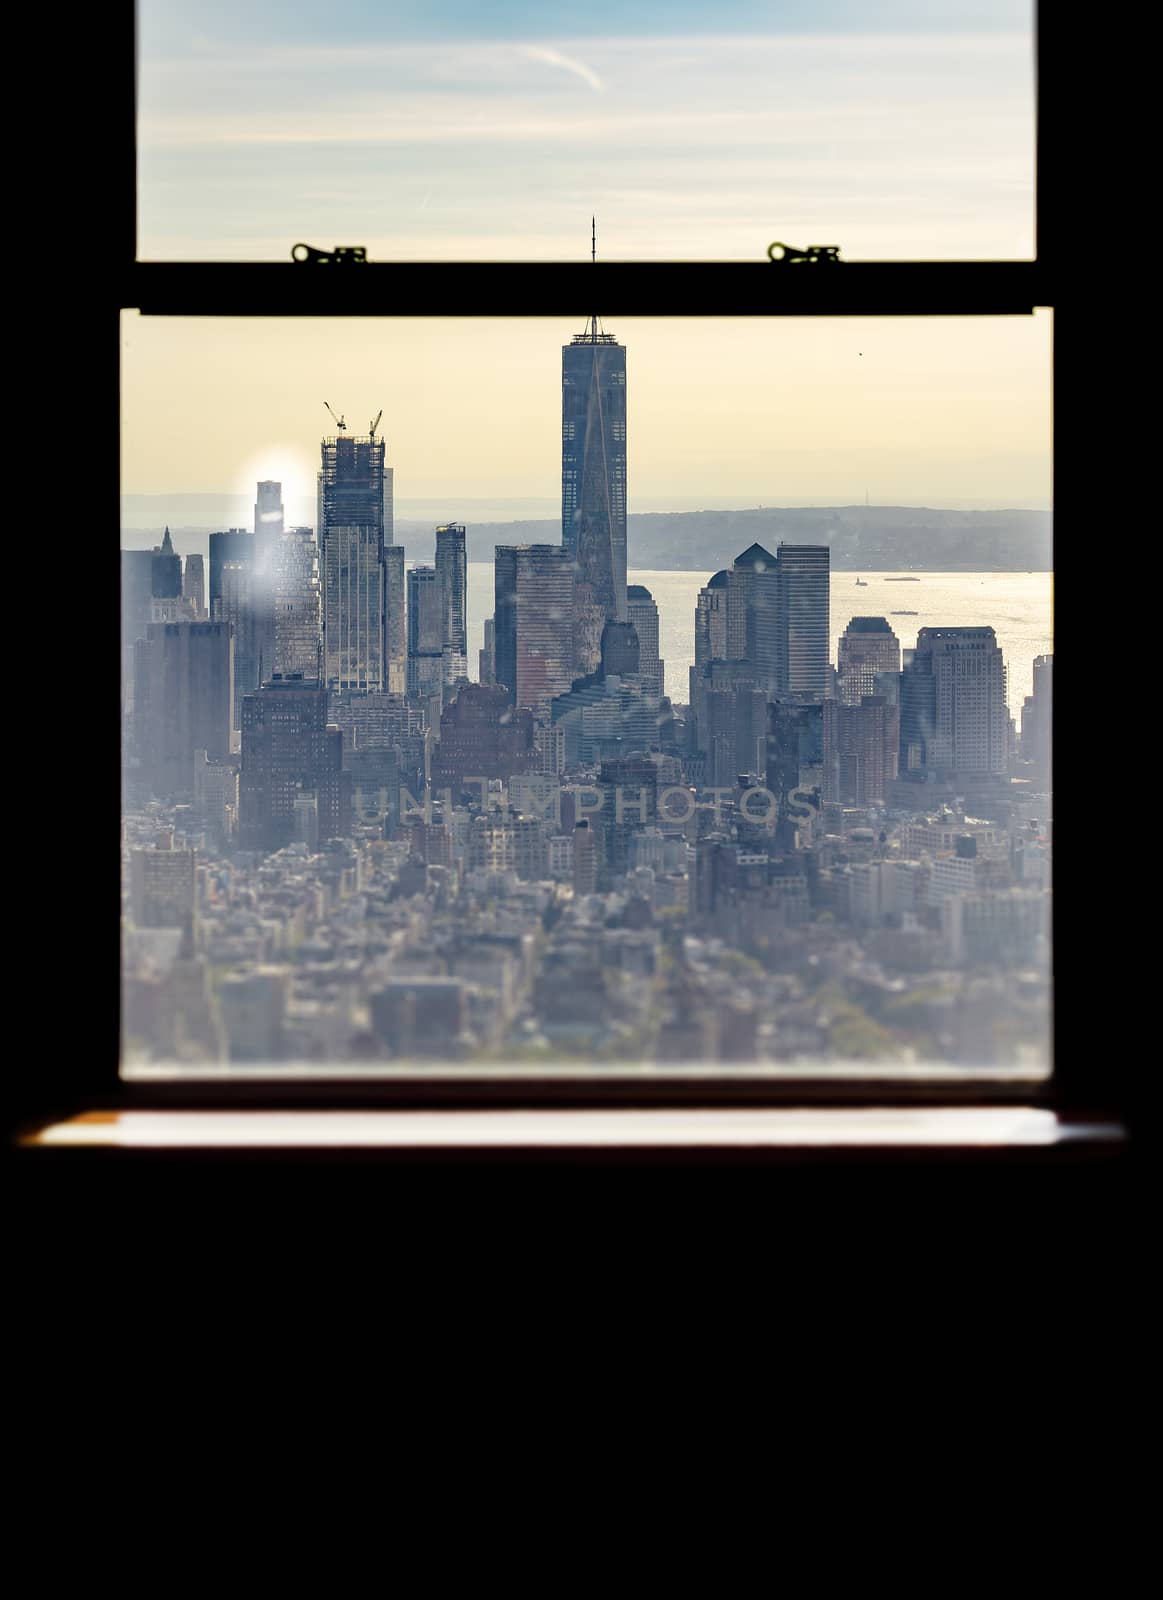 New York skyline viewed through a window frame